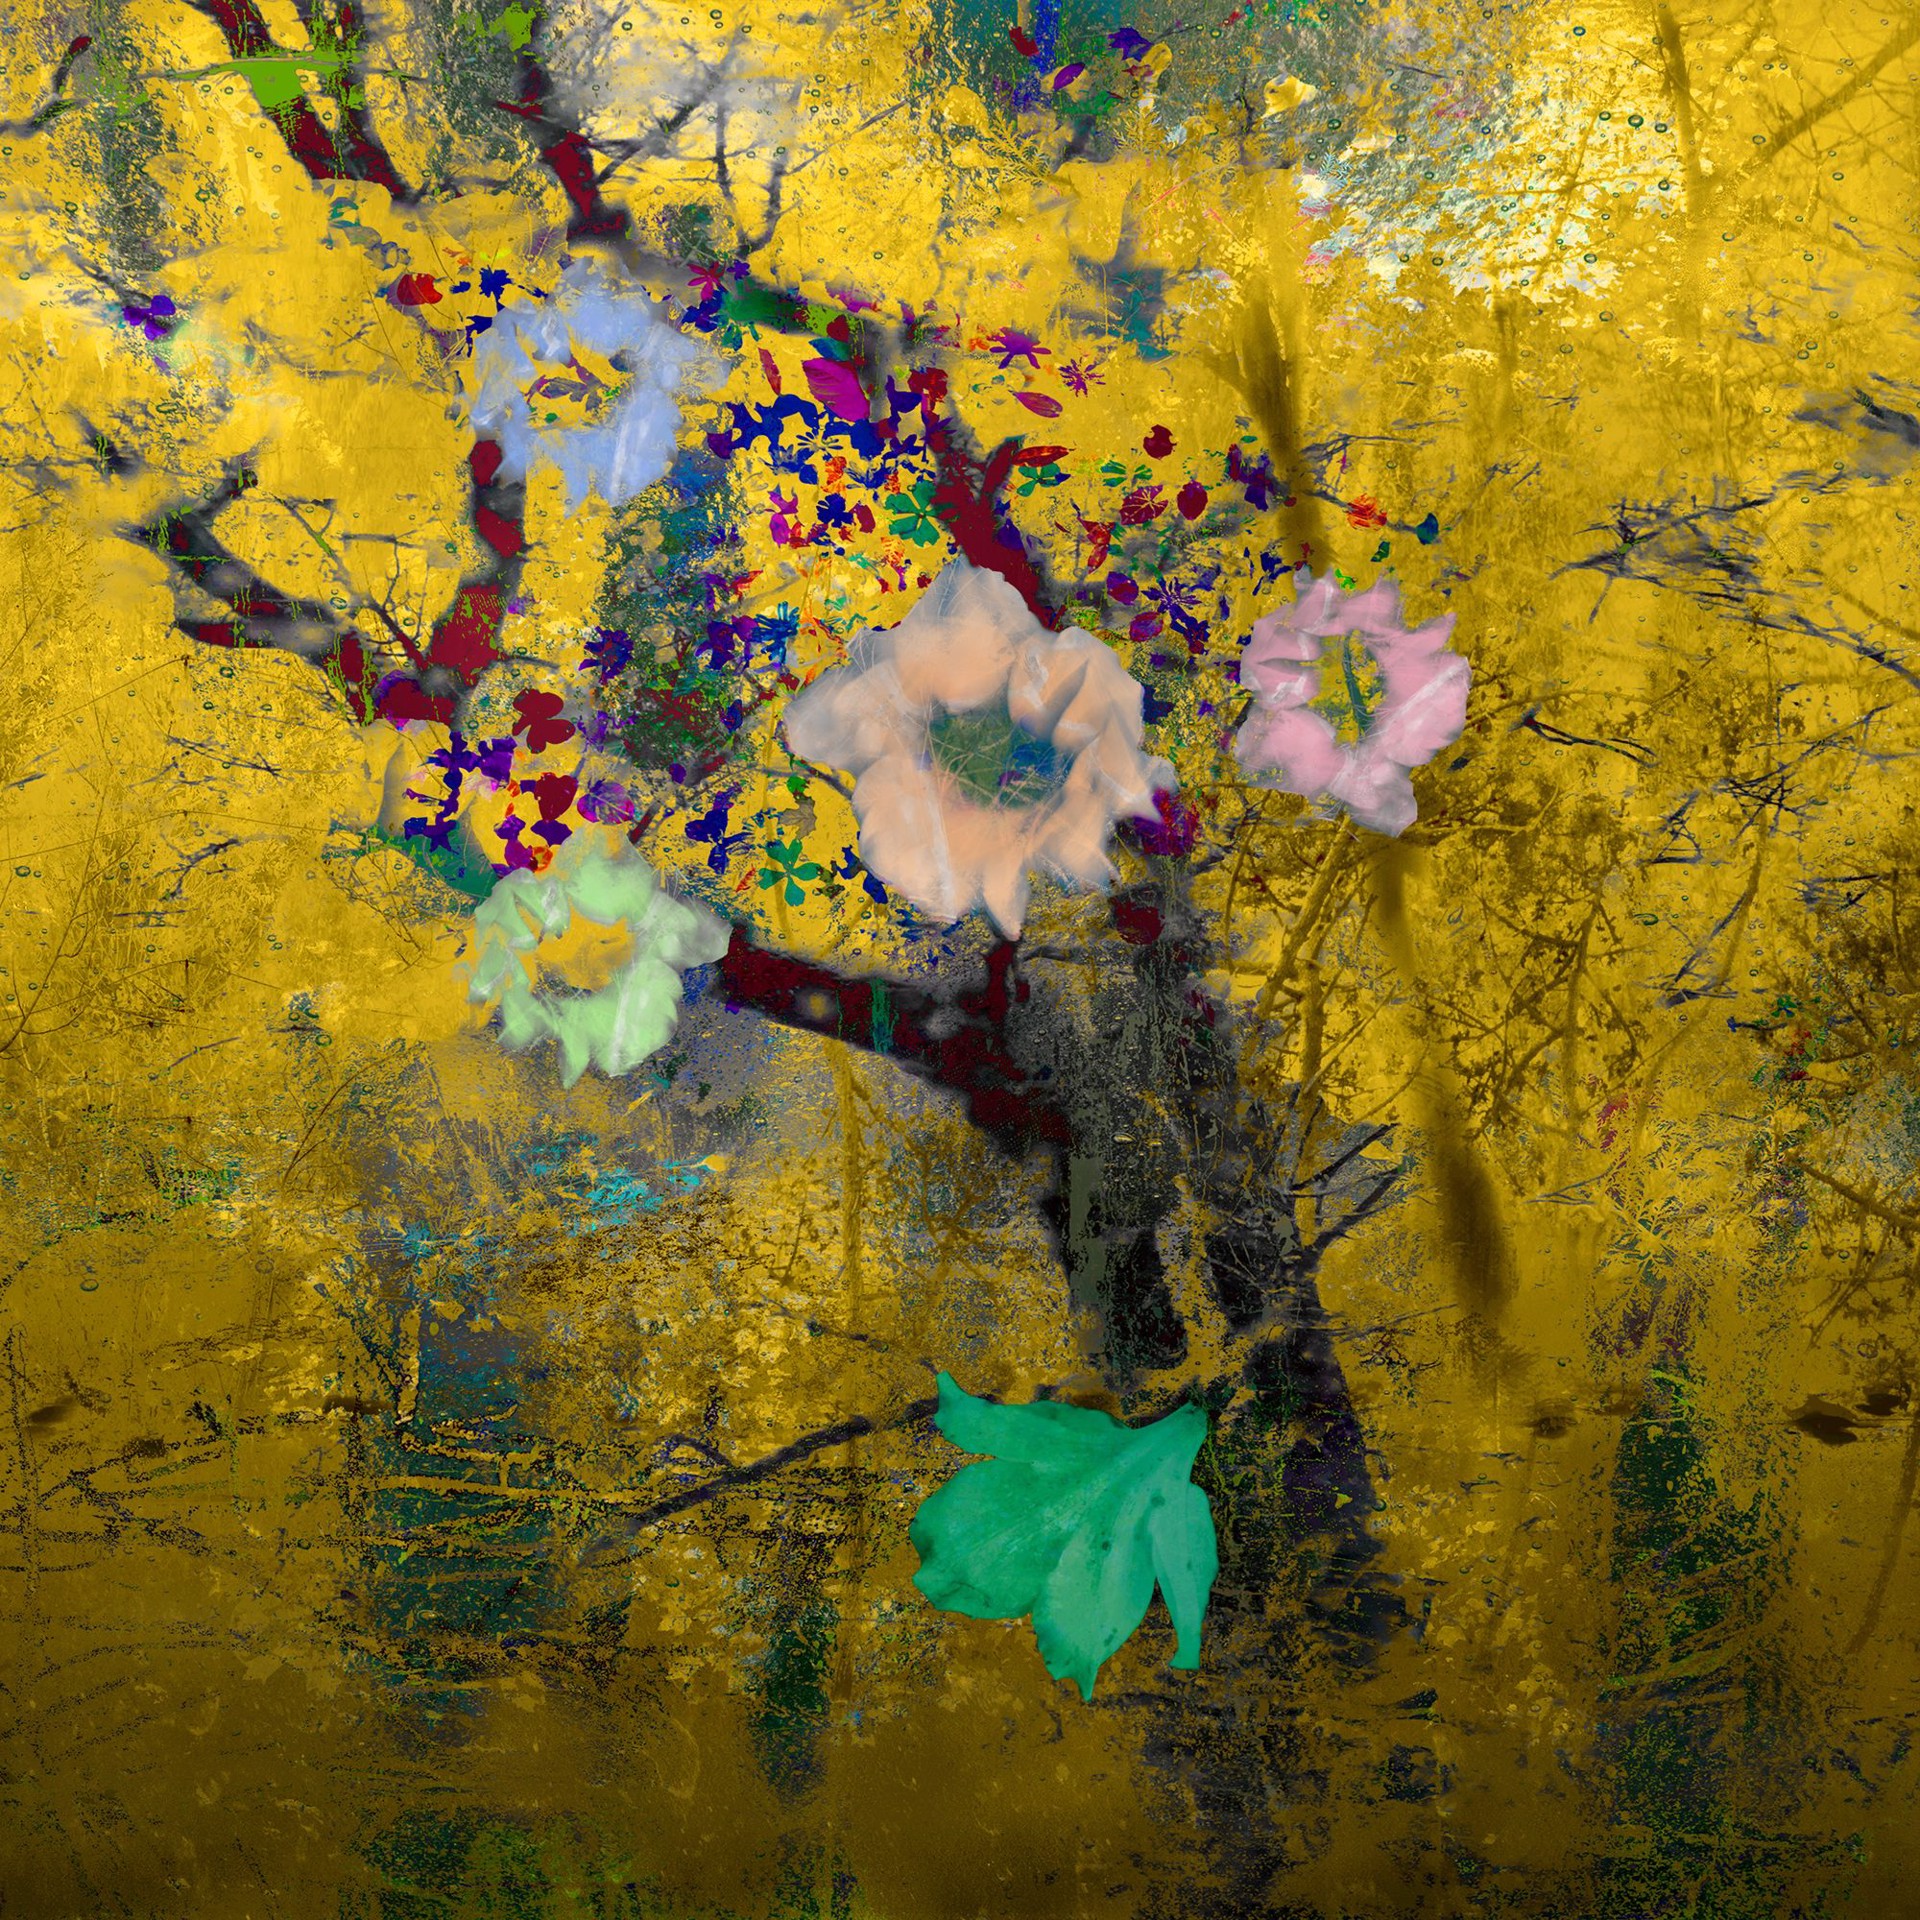 FLOWERS SERIES I NO. 9 by CAROL EISENBERG